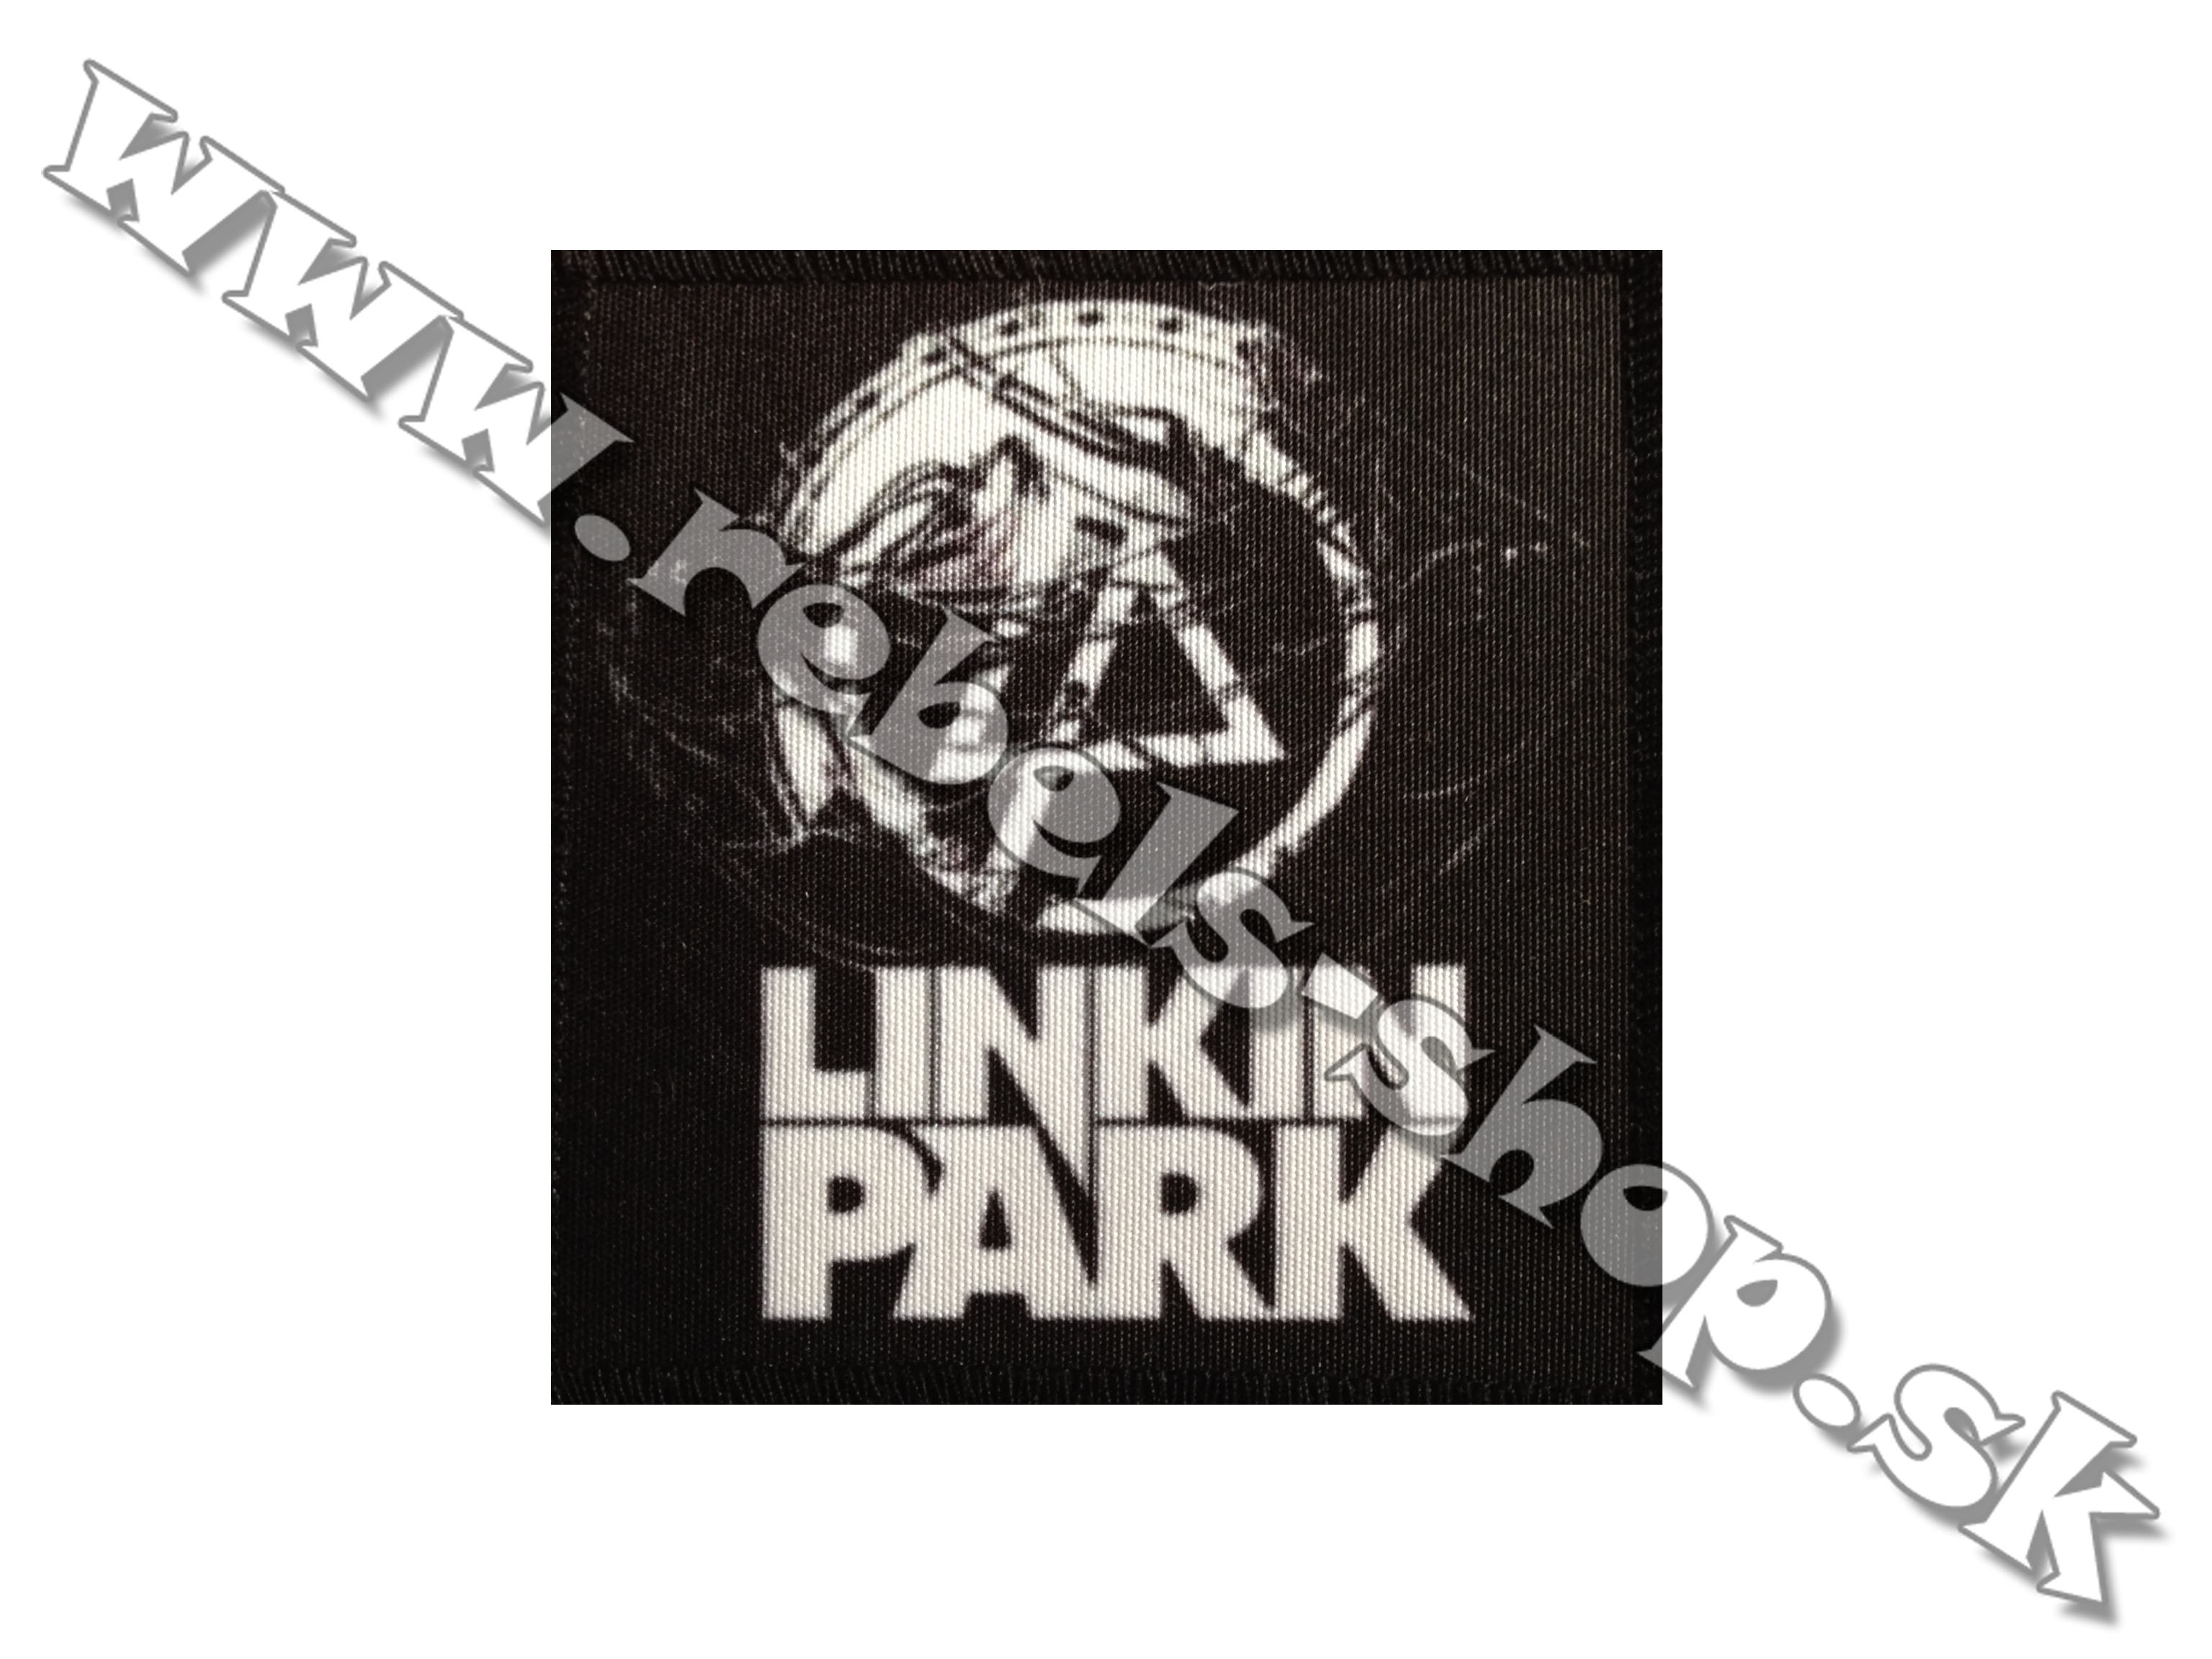 Nášivka "Linkin Park"